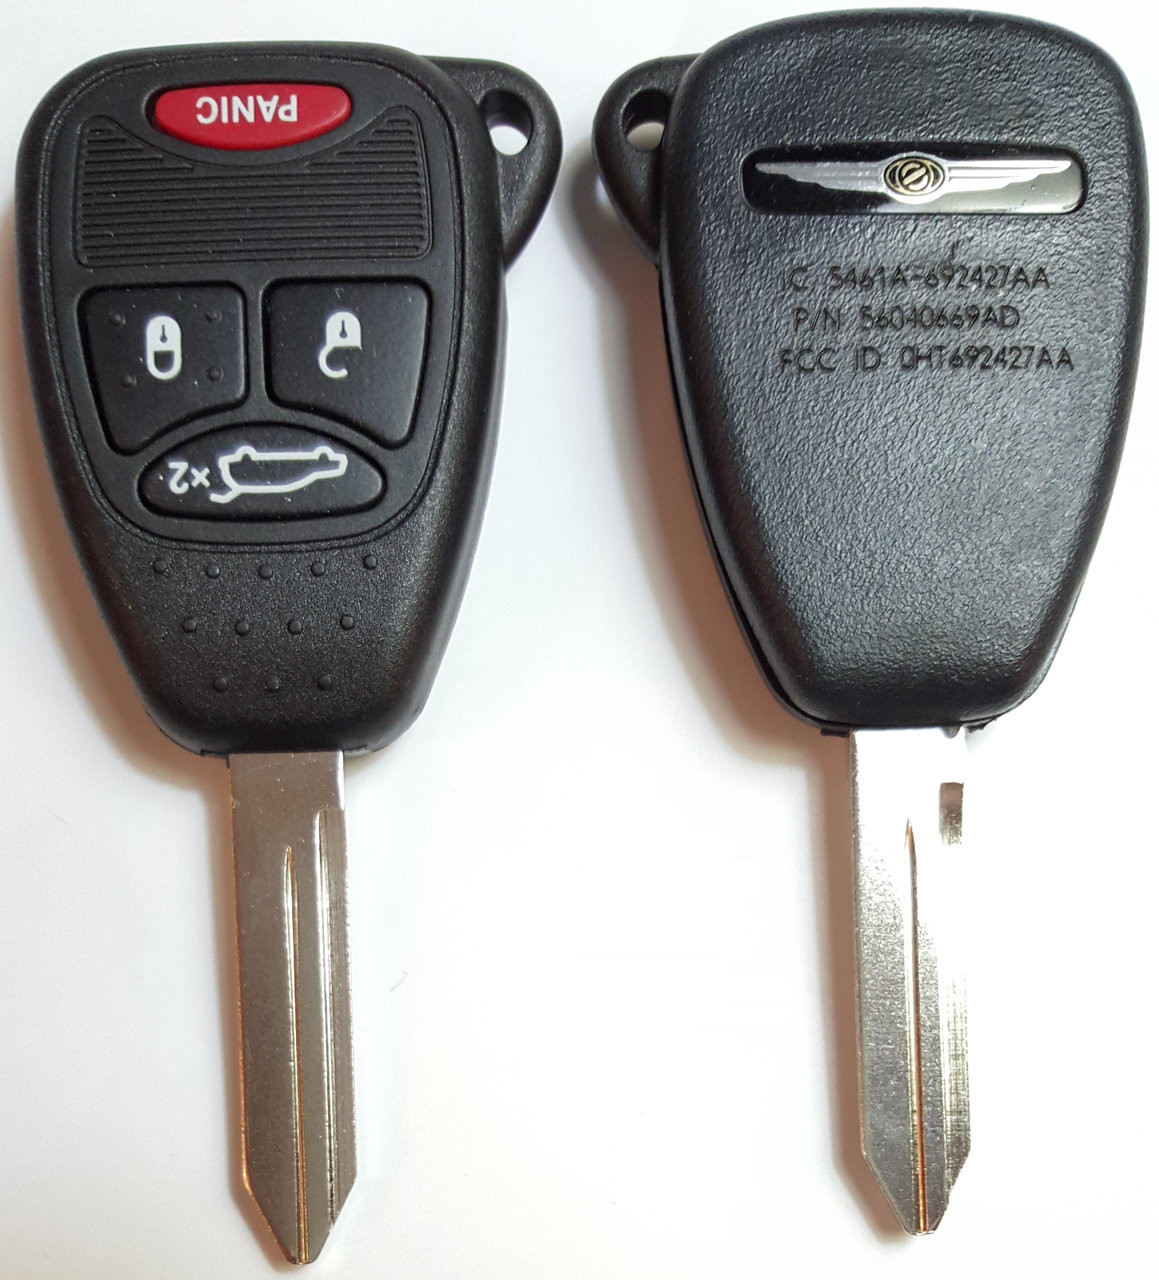 OEM Chrysler 4 button RemoteHead COMPLETE OEM Fob fobik key remote panic lock unlock